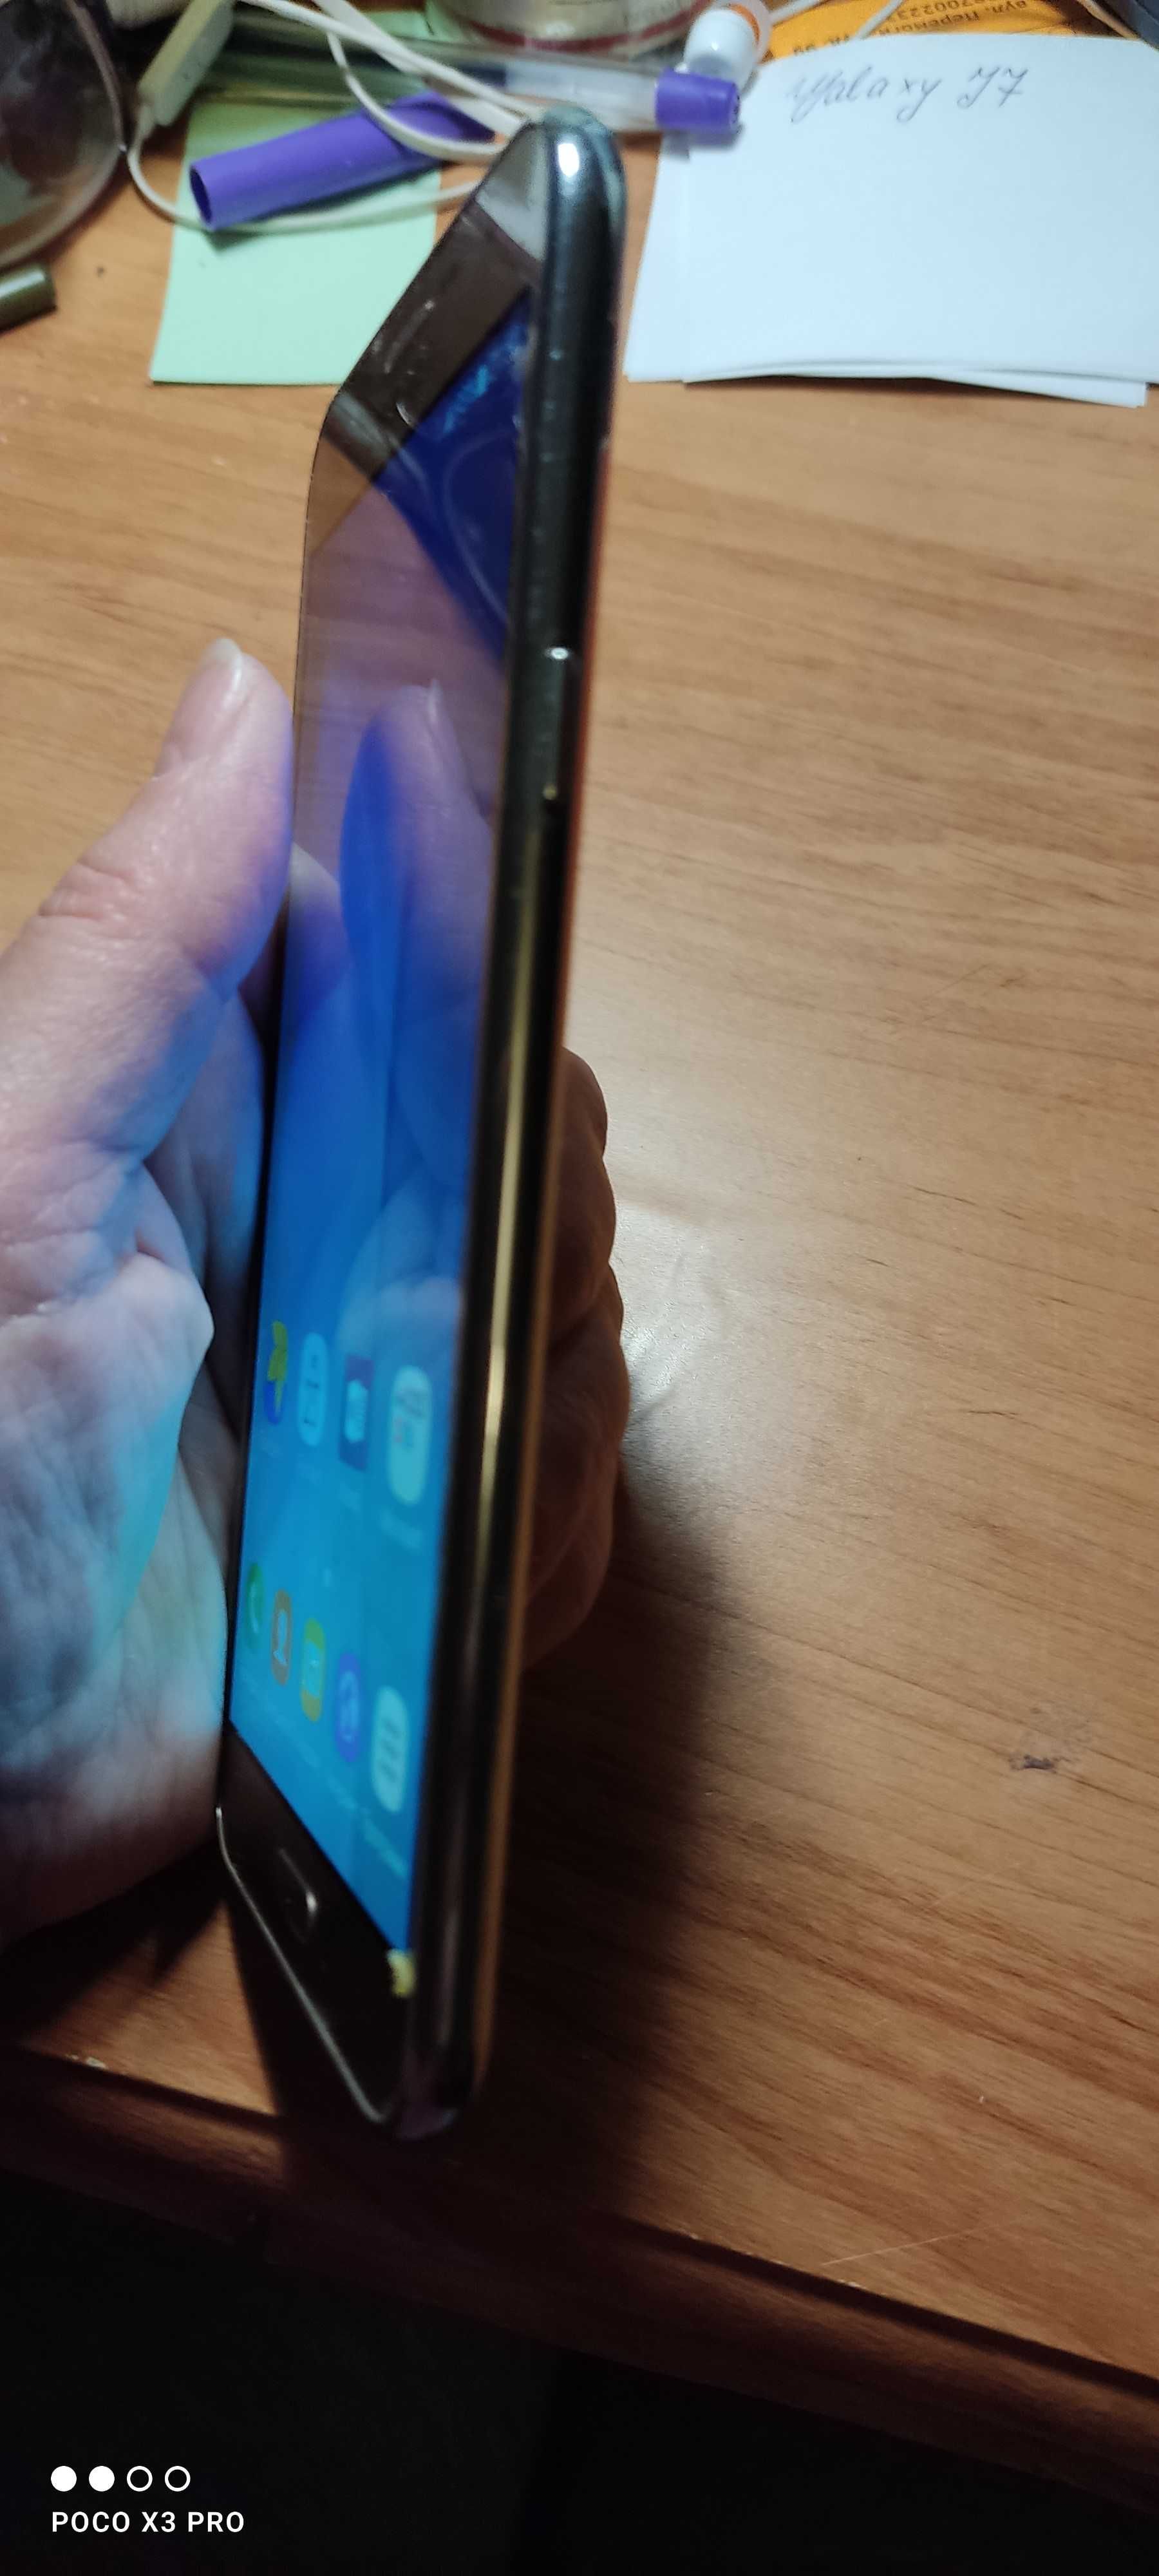 Samsung Galaxy J7 Neo 16 GB Gold